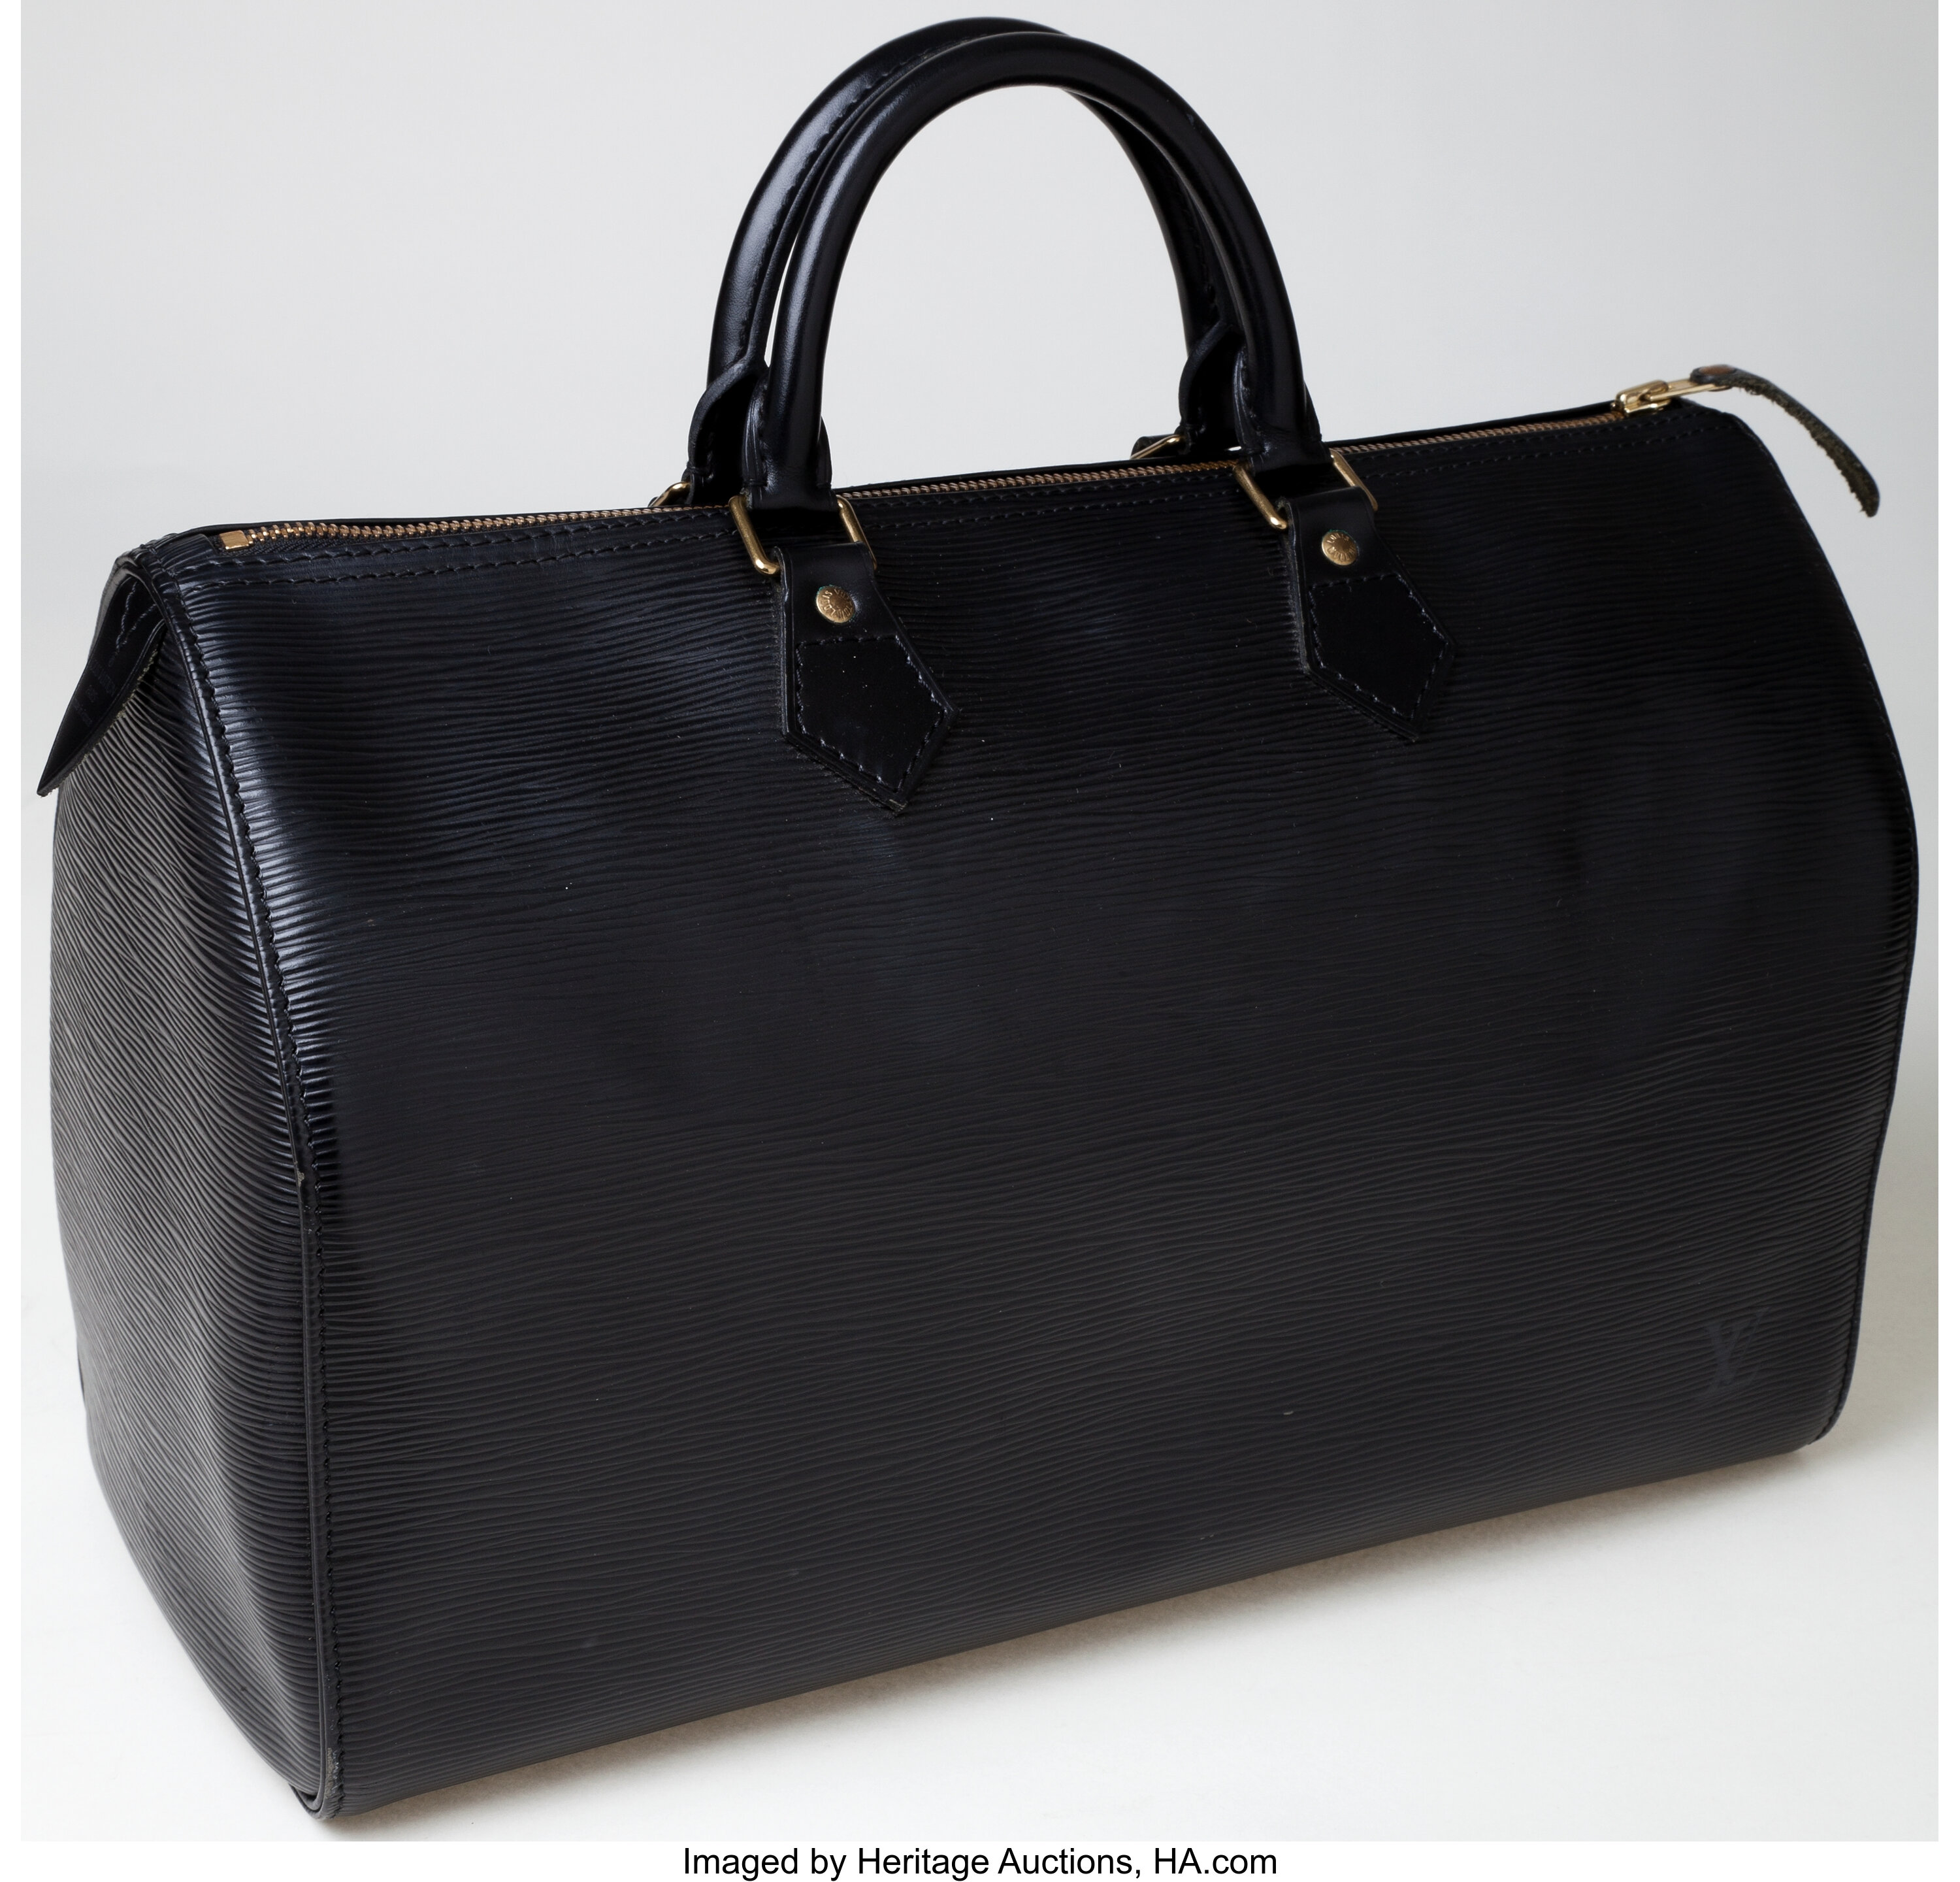 Sold at Auction: LOUIS VUITTON - BLACK EPI SPEEDY 35 HAND BAG - LV - LARGE